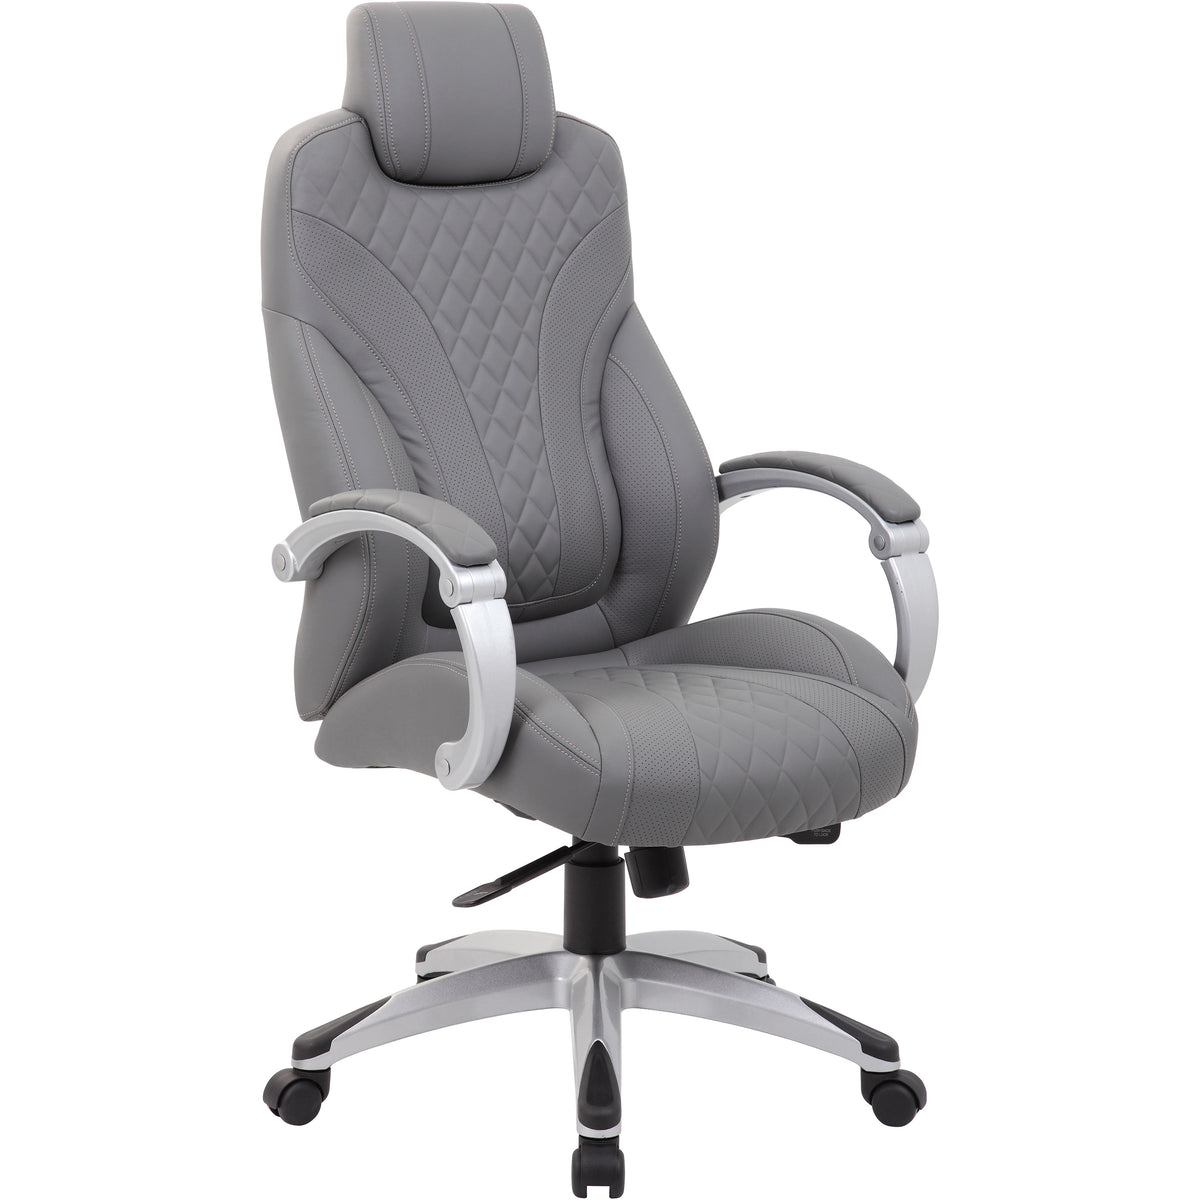 Executive Hinged Arm Chair - Grey, B8871-GY